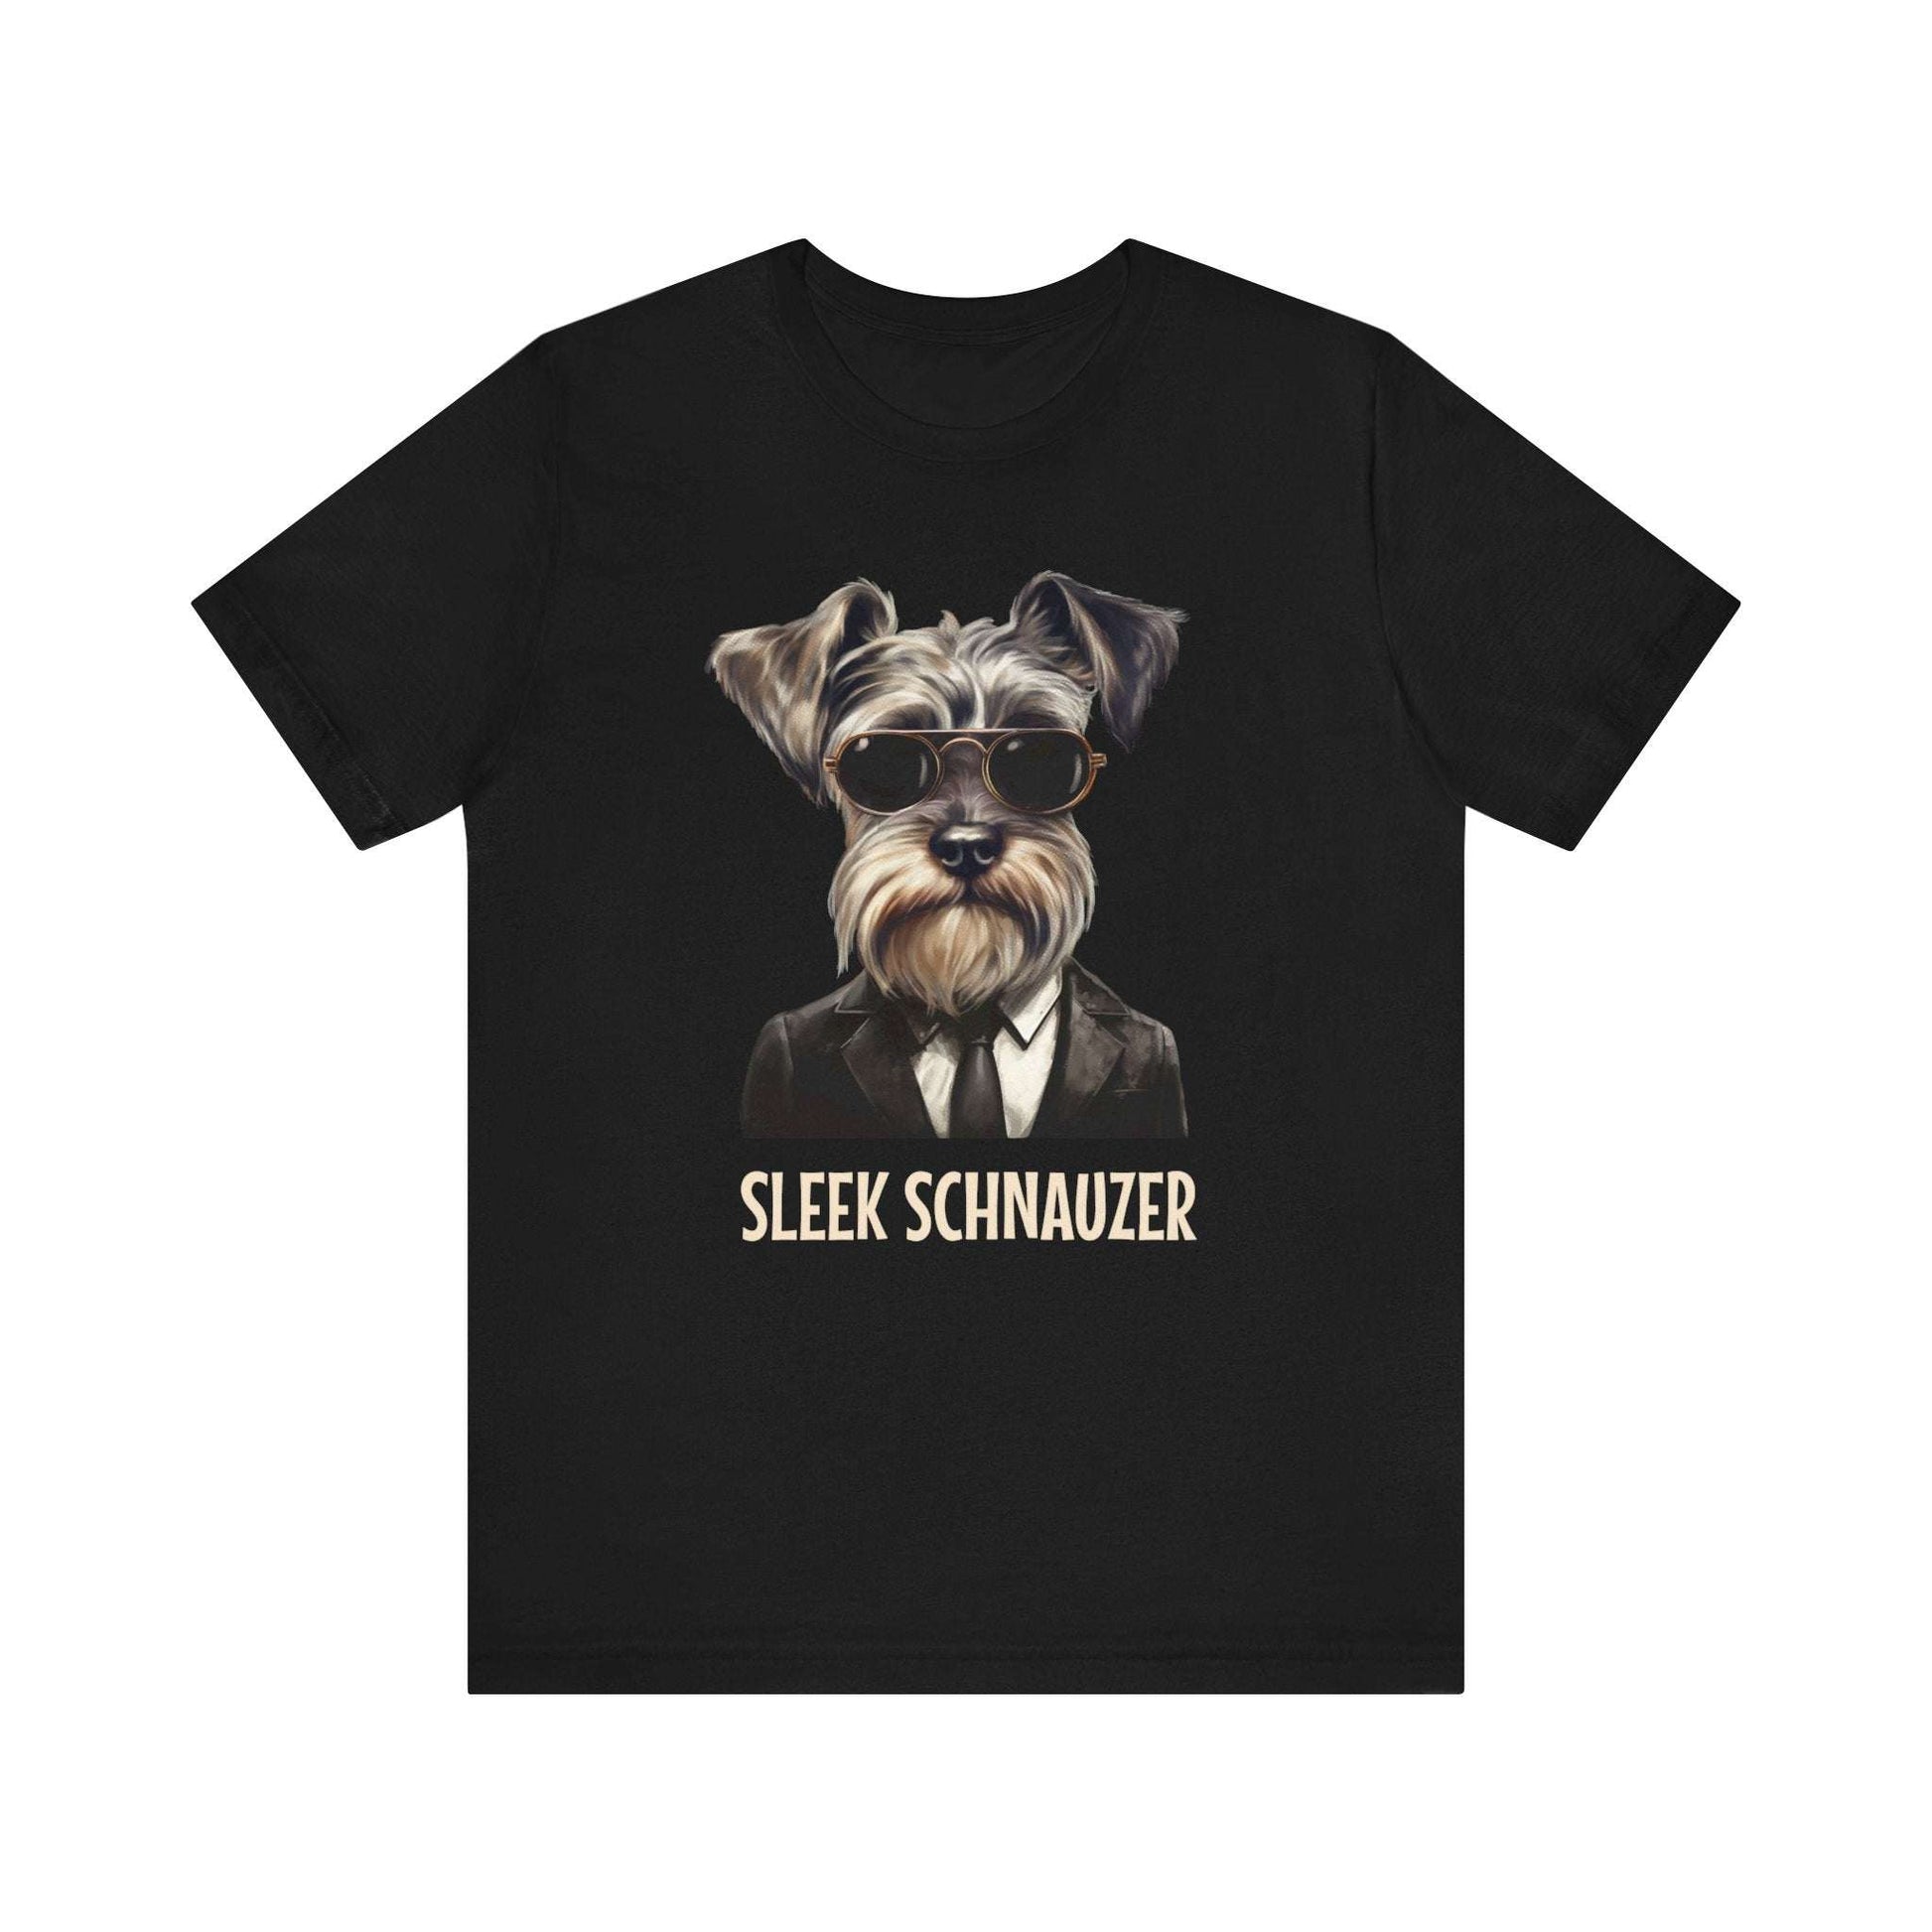 Fabulous Tee Shirts' black 'Sleek Schnauzer' t-shirt displayed to emphasize its superior quality.